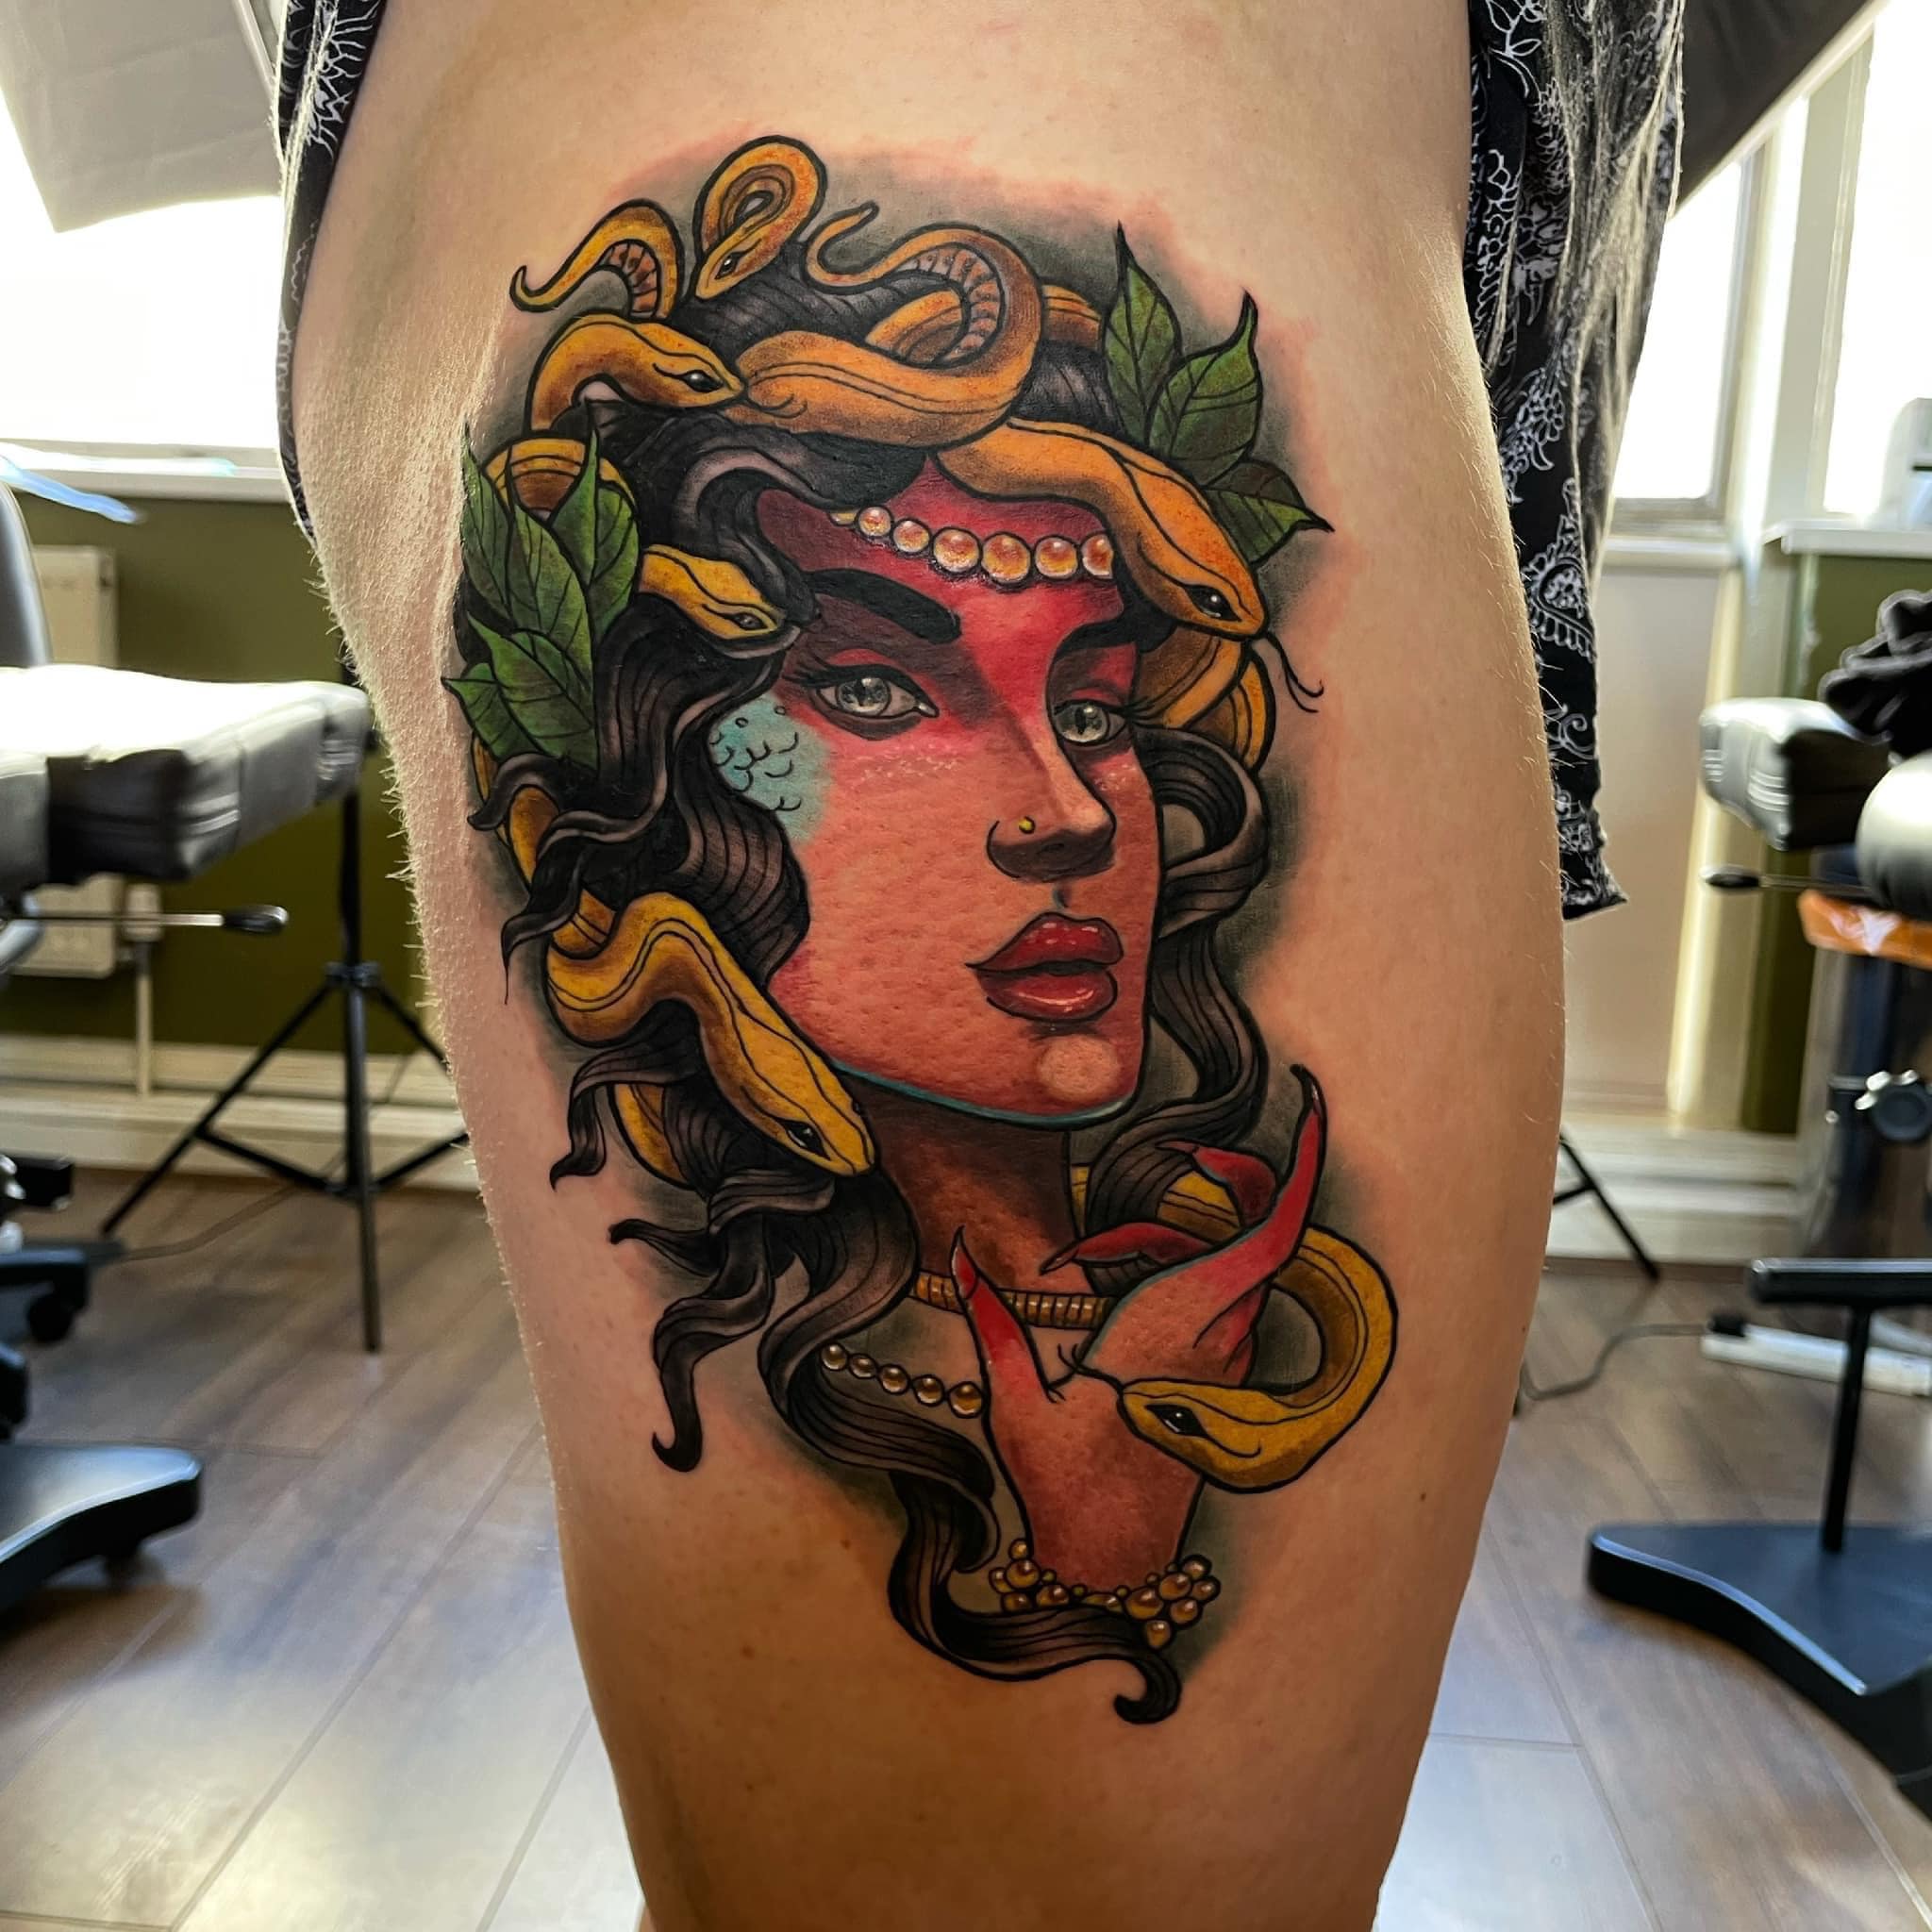 Medusa Tattoo - Tattoo Shop and Piercing Studio Liverpool